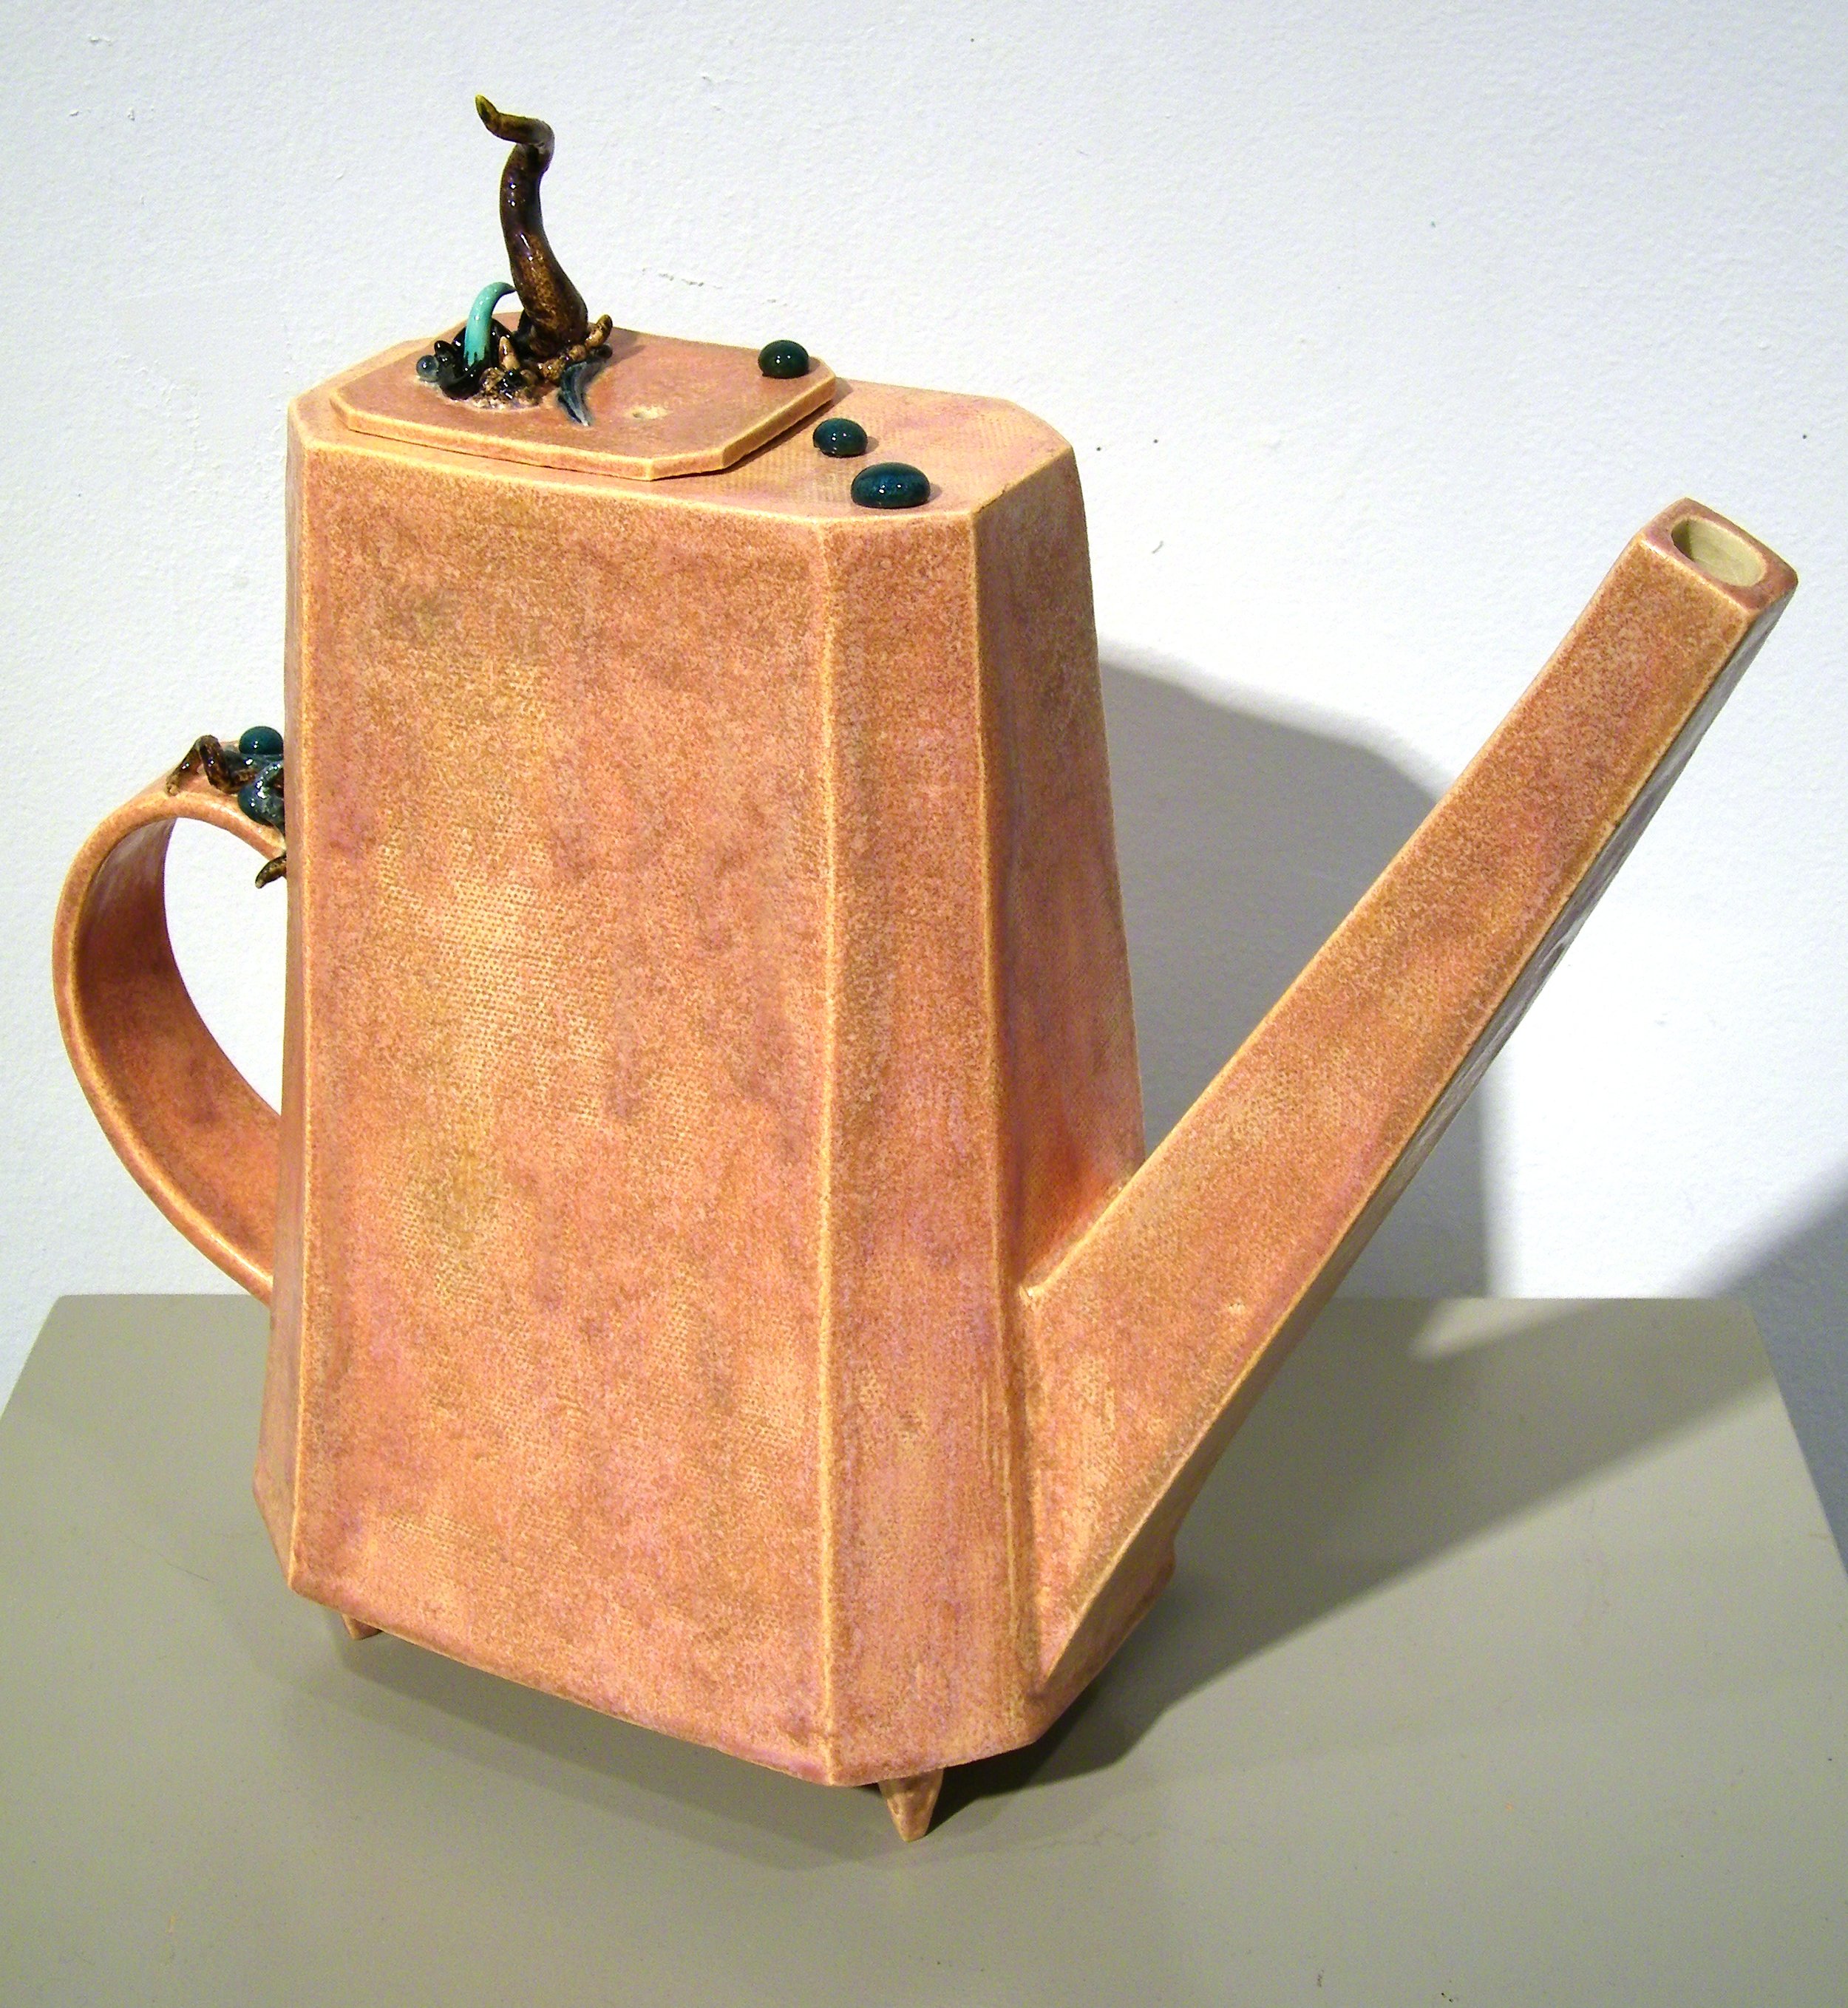  William Yonker, “Teapot,” 2012, ceramic, 12” x 12 1/2” x 4” 